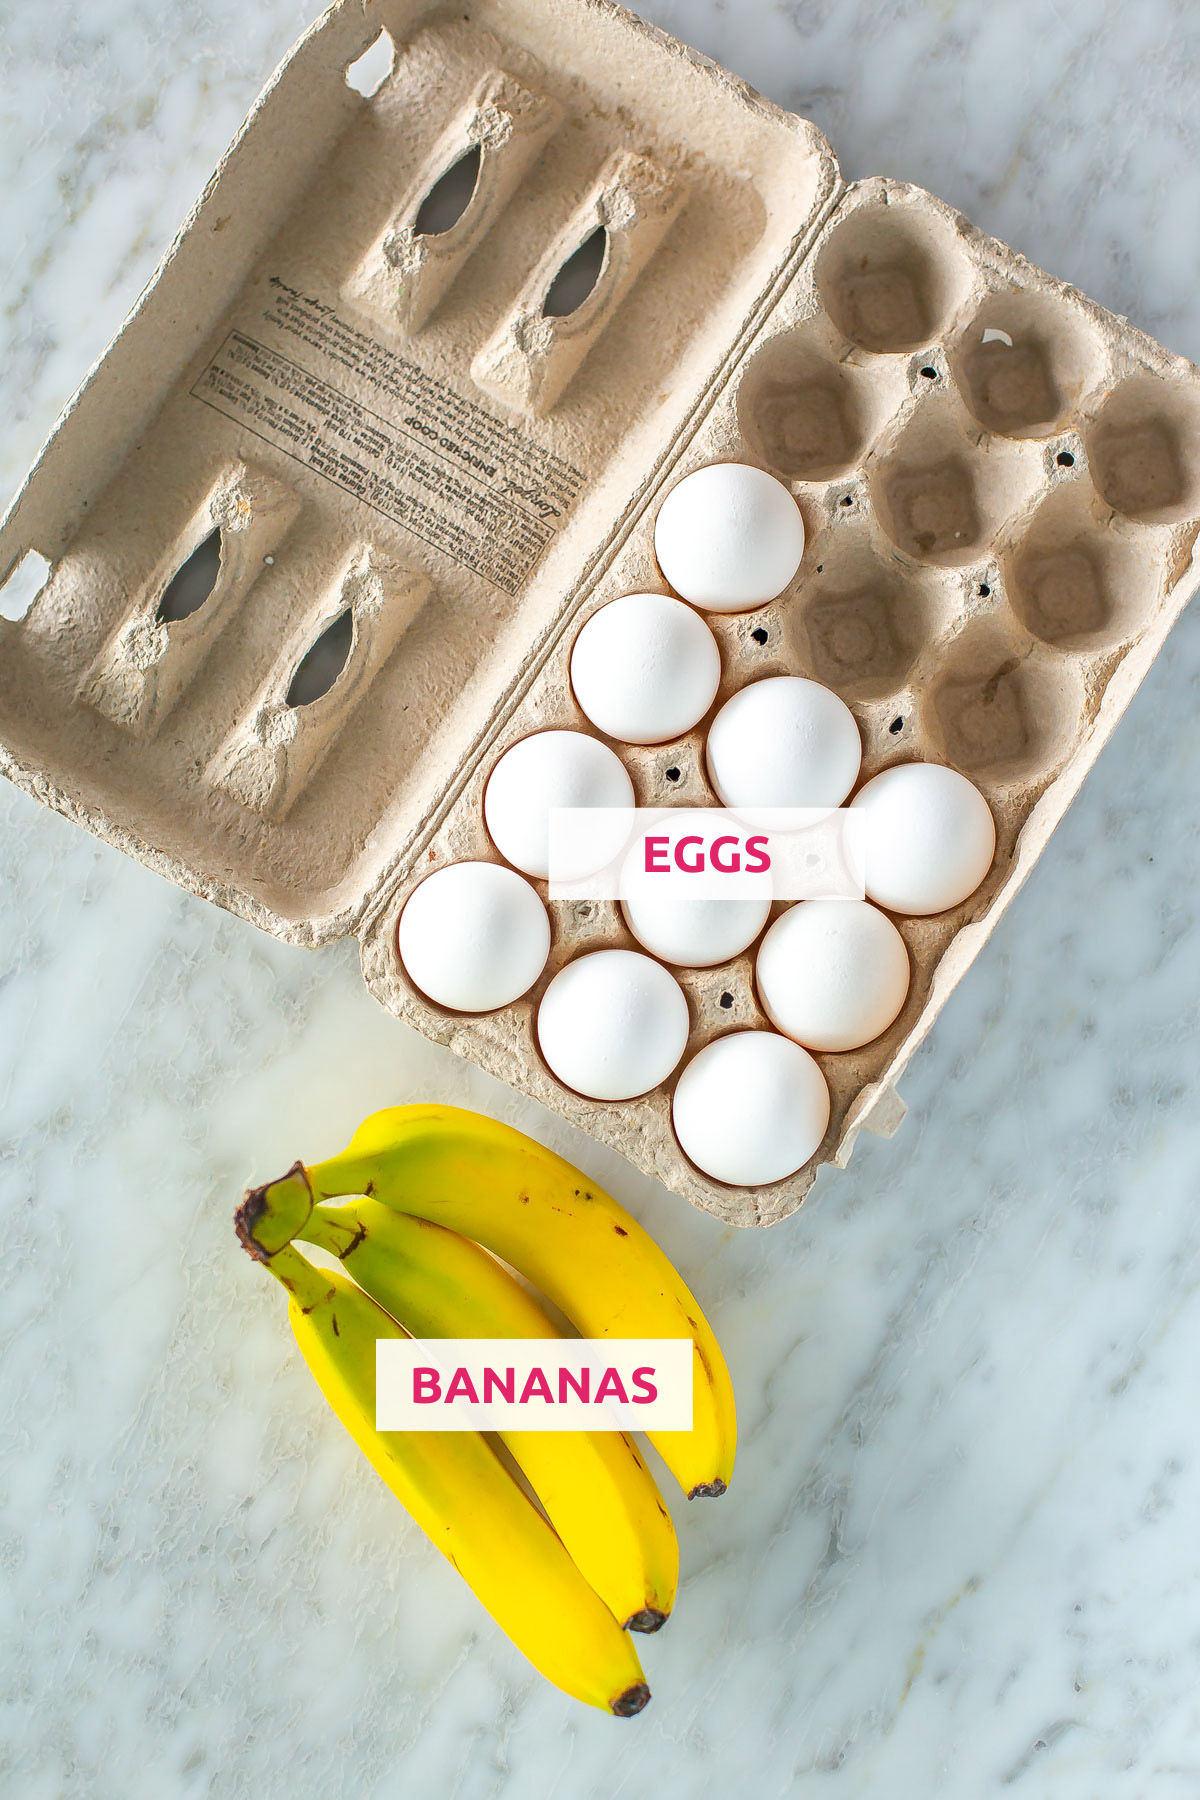 Ingredients for banana egg pancakes: bananas and eggs.